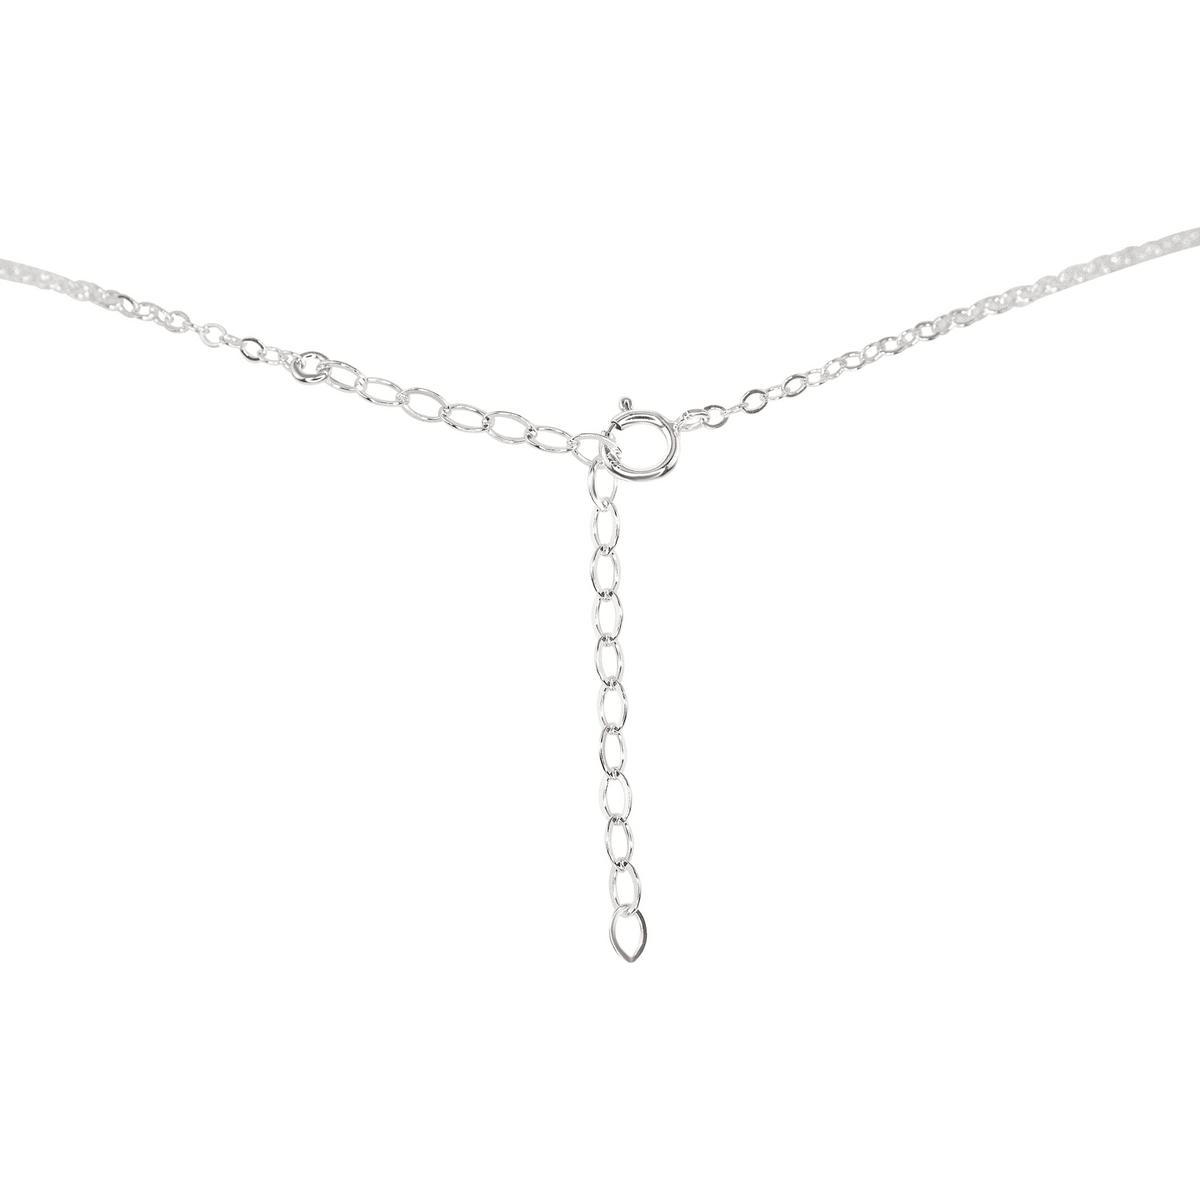 Tiny Raw Larimar Pendant Necklace - Tiny Raw Larimar Pendant Necklace - Sterling Silver / Cable - Luna Tide Handmade Crystal Jewellery